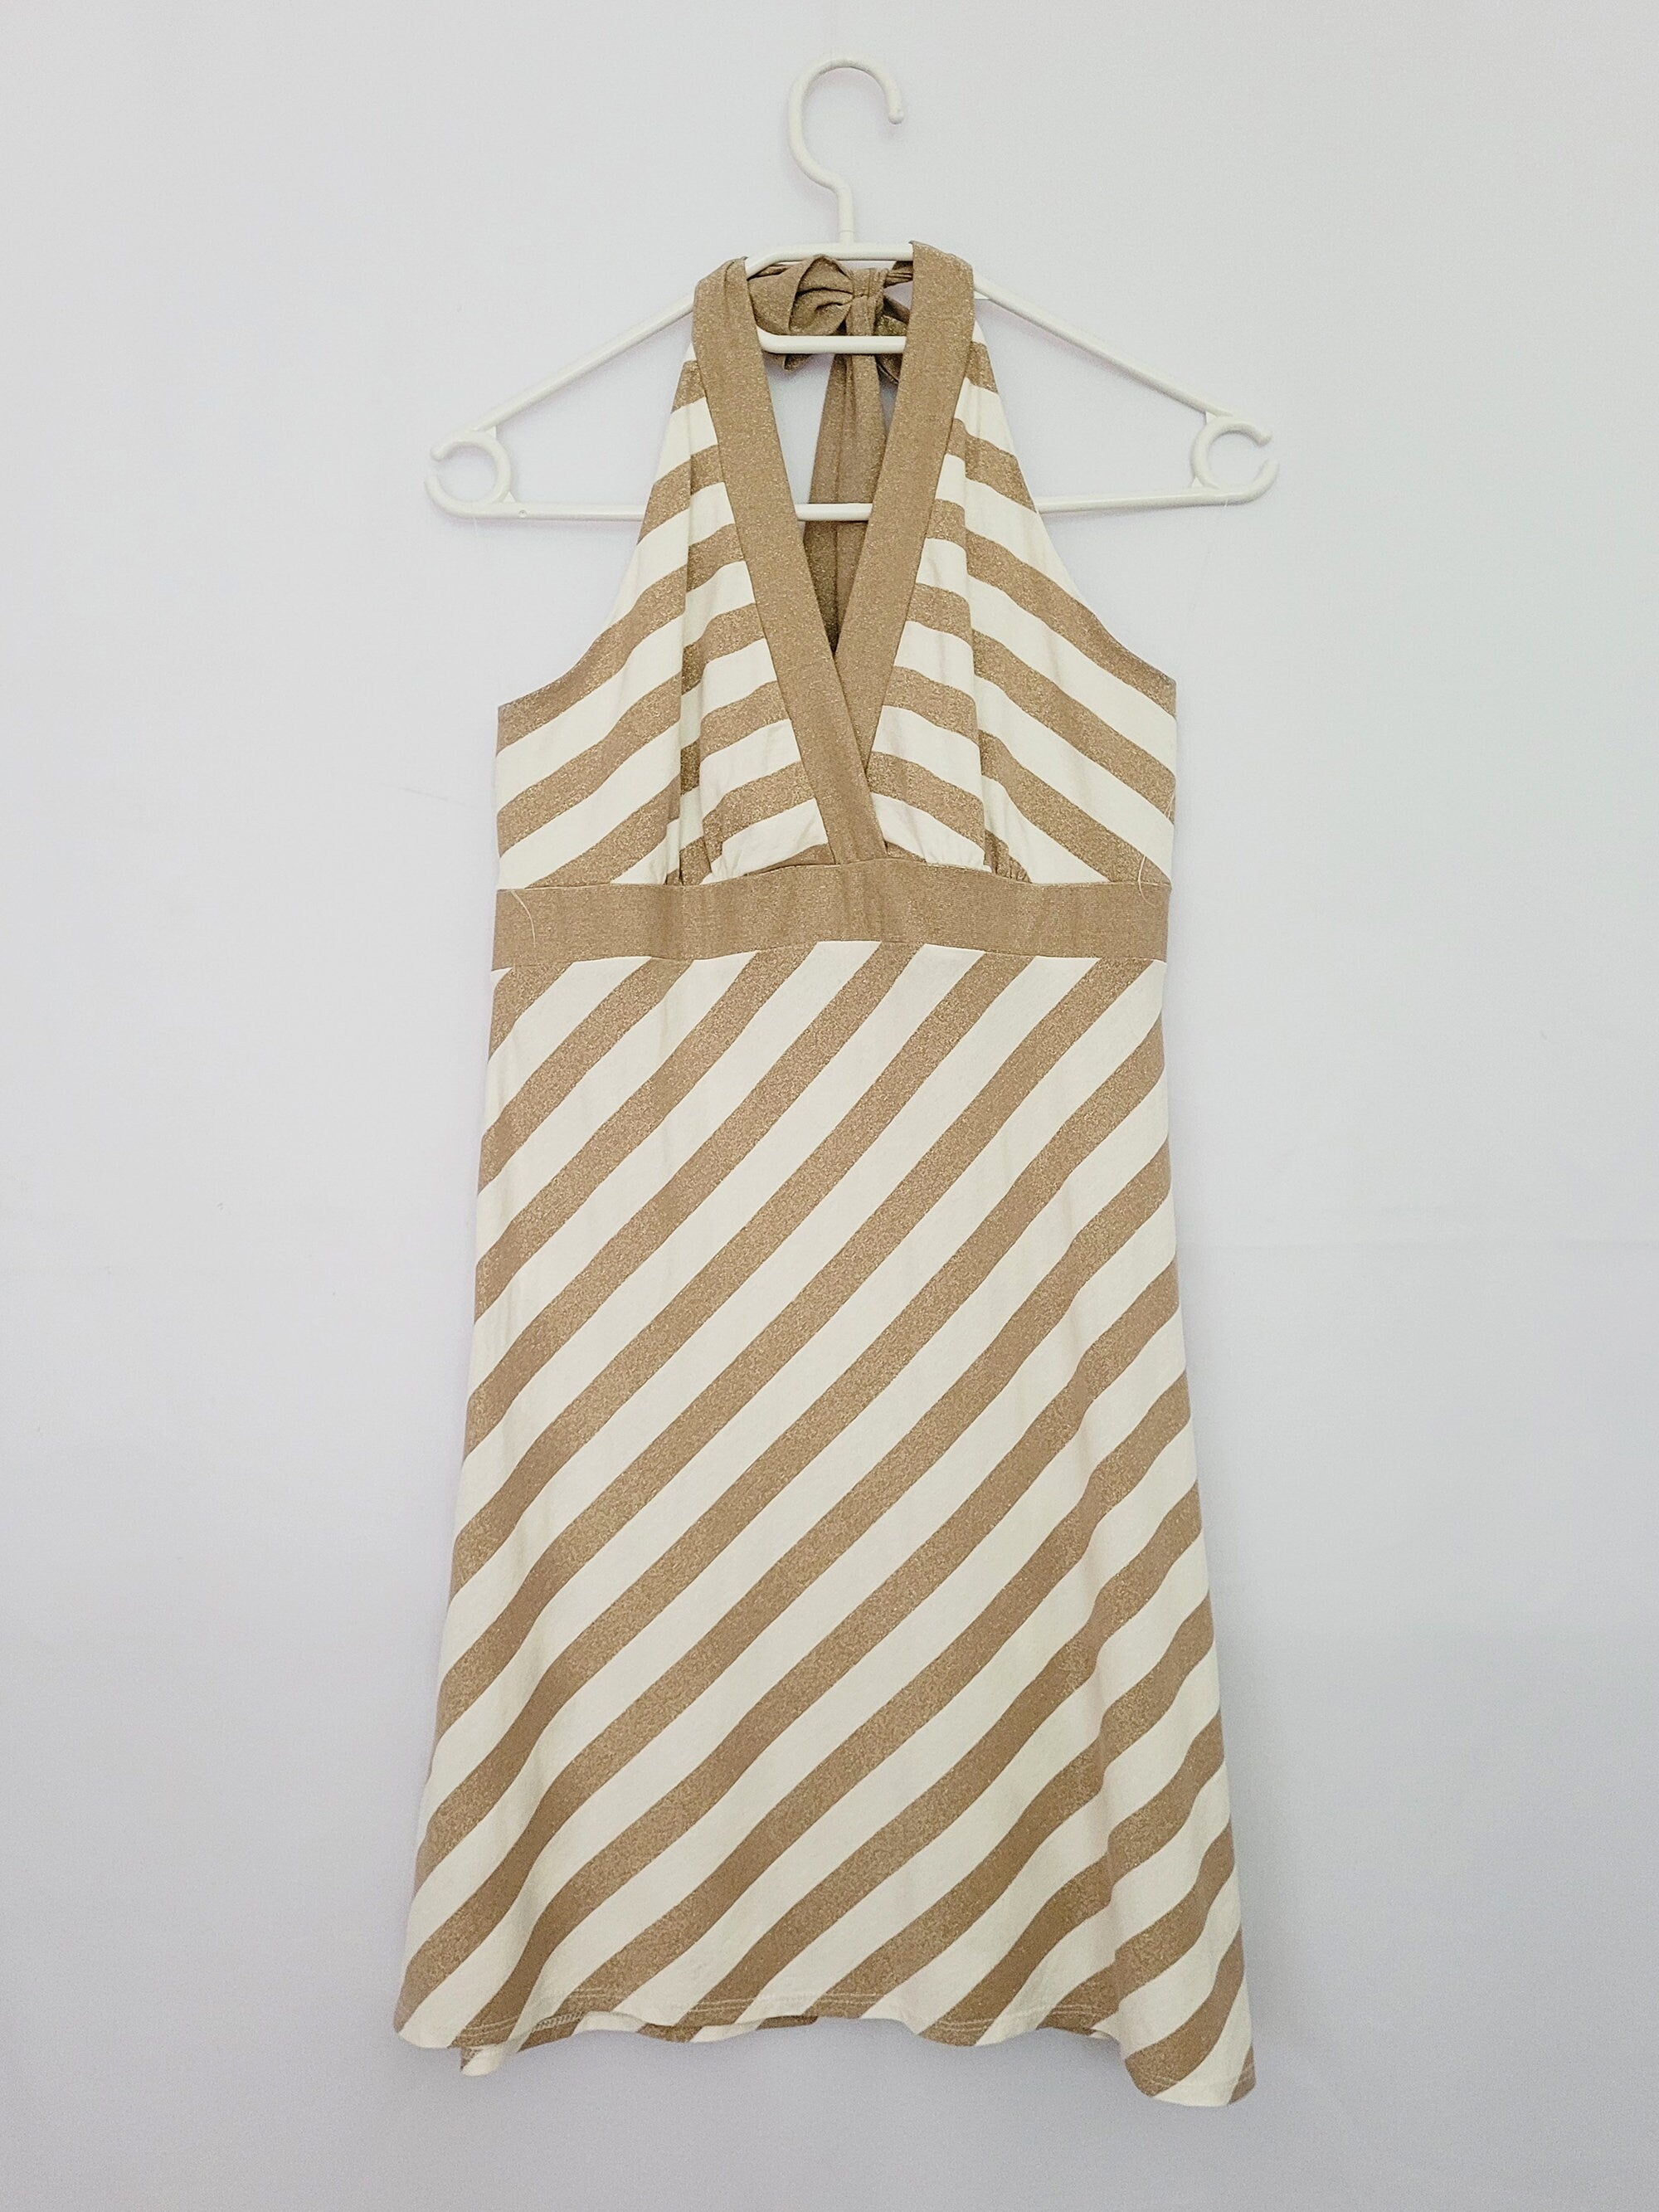 Y2K retro striped shimmer stretch halter party mini dress